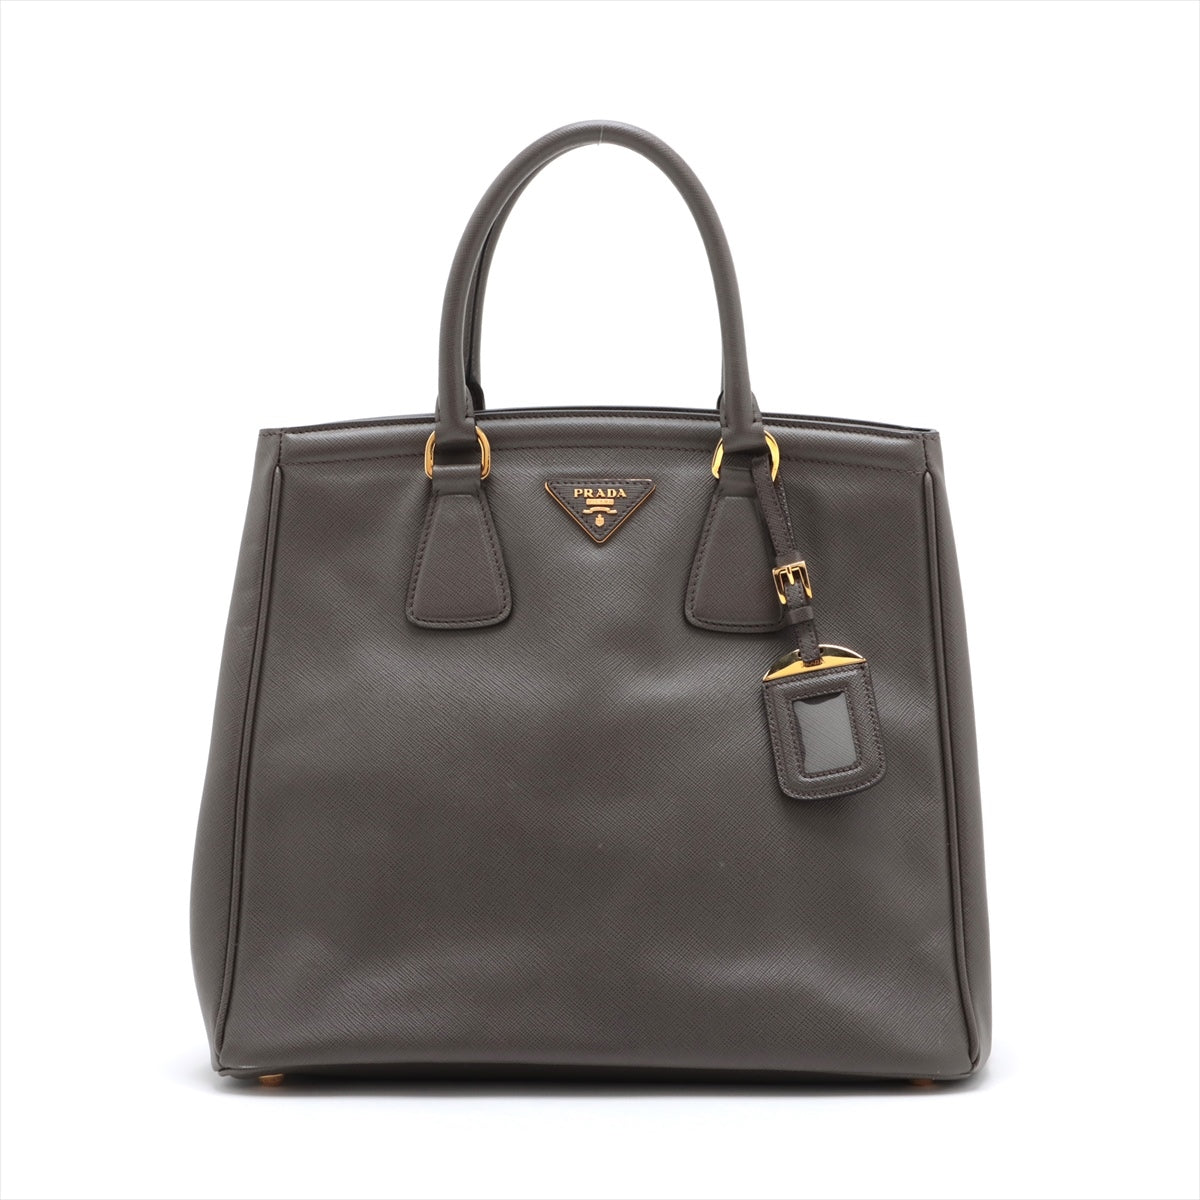 Prada Saffiano Leather Handbag Grey BN2404